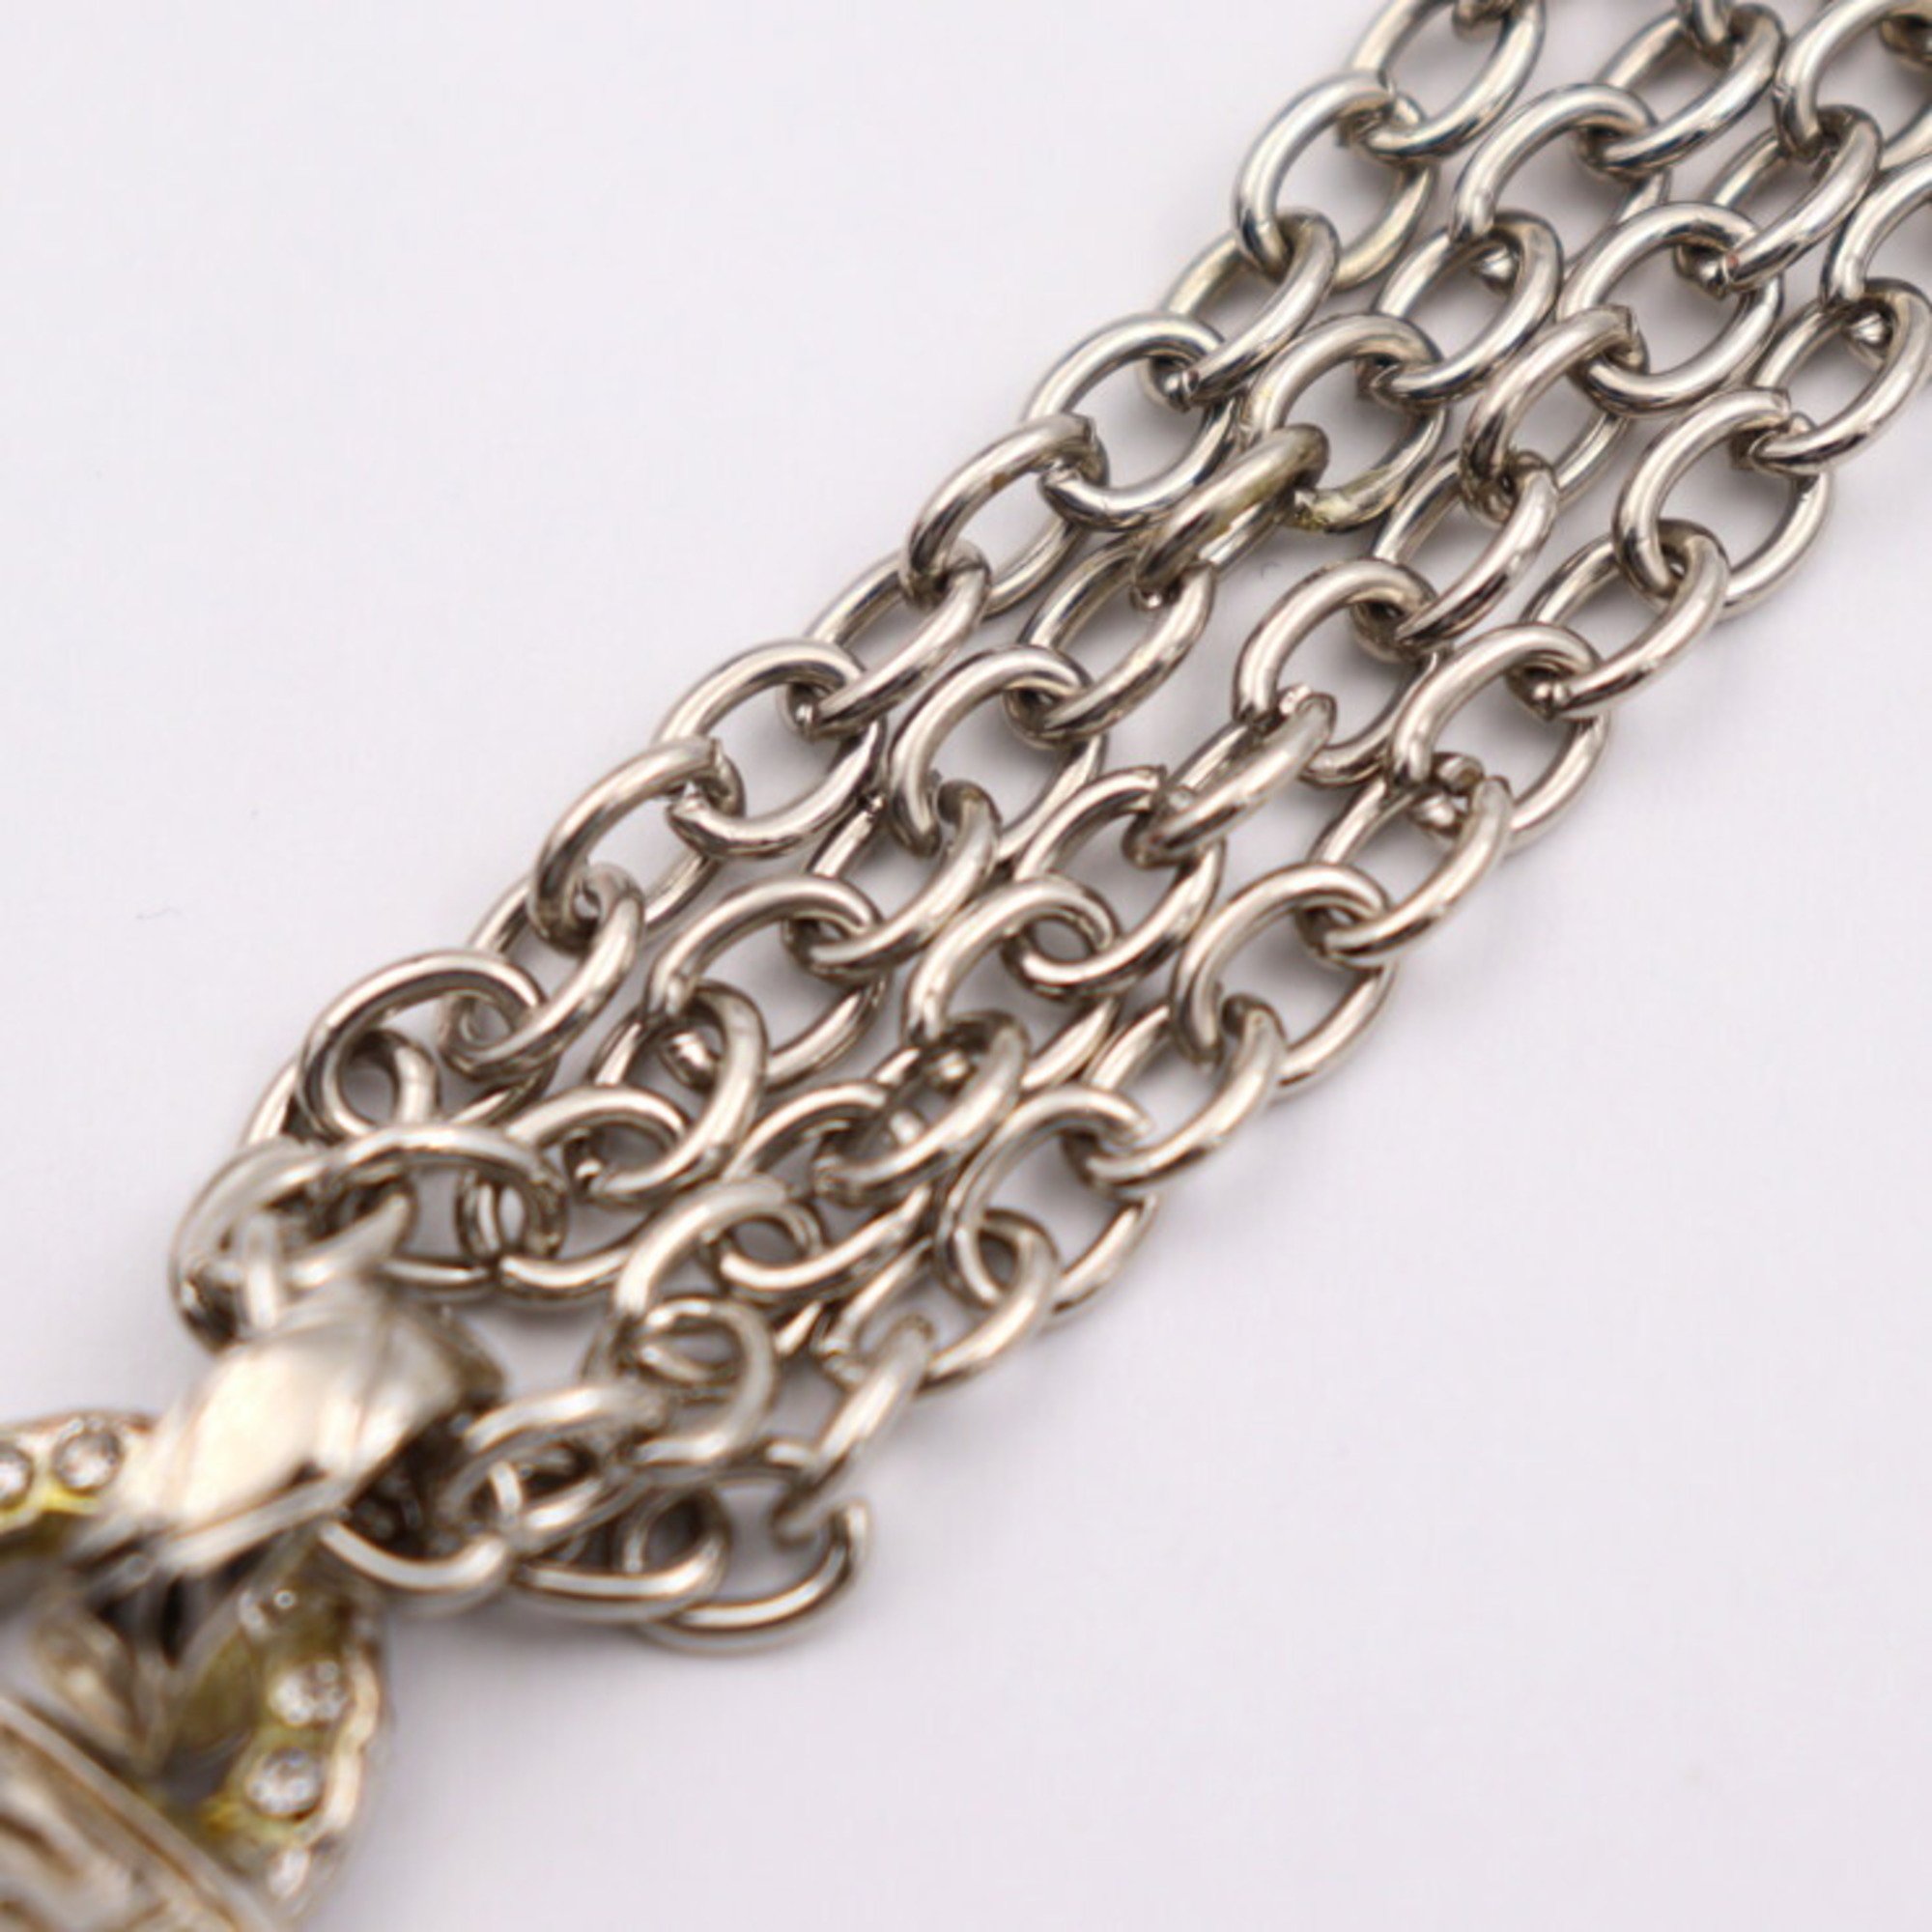 VERSACE Versace necklace metal rhinestone silver Medusa pendant